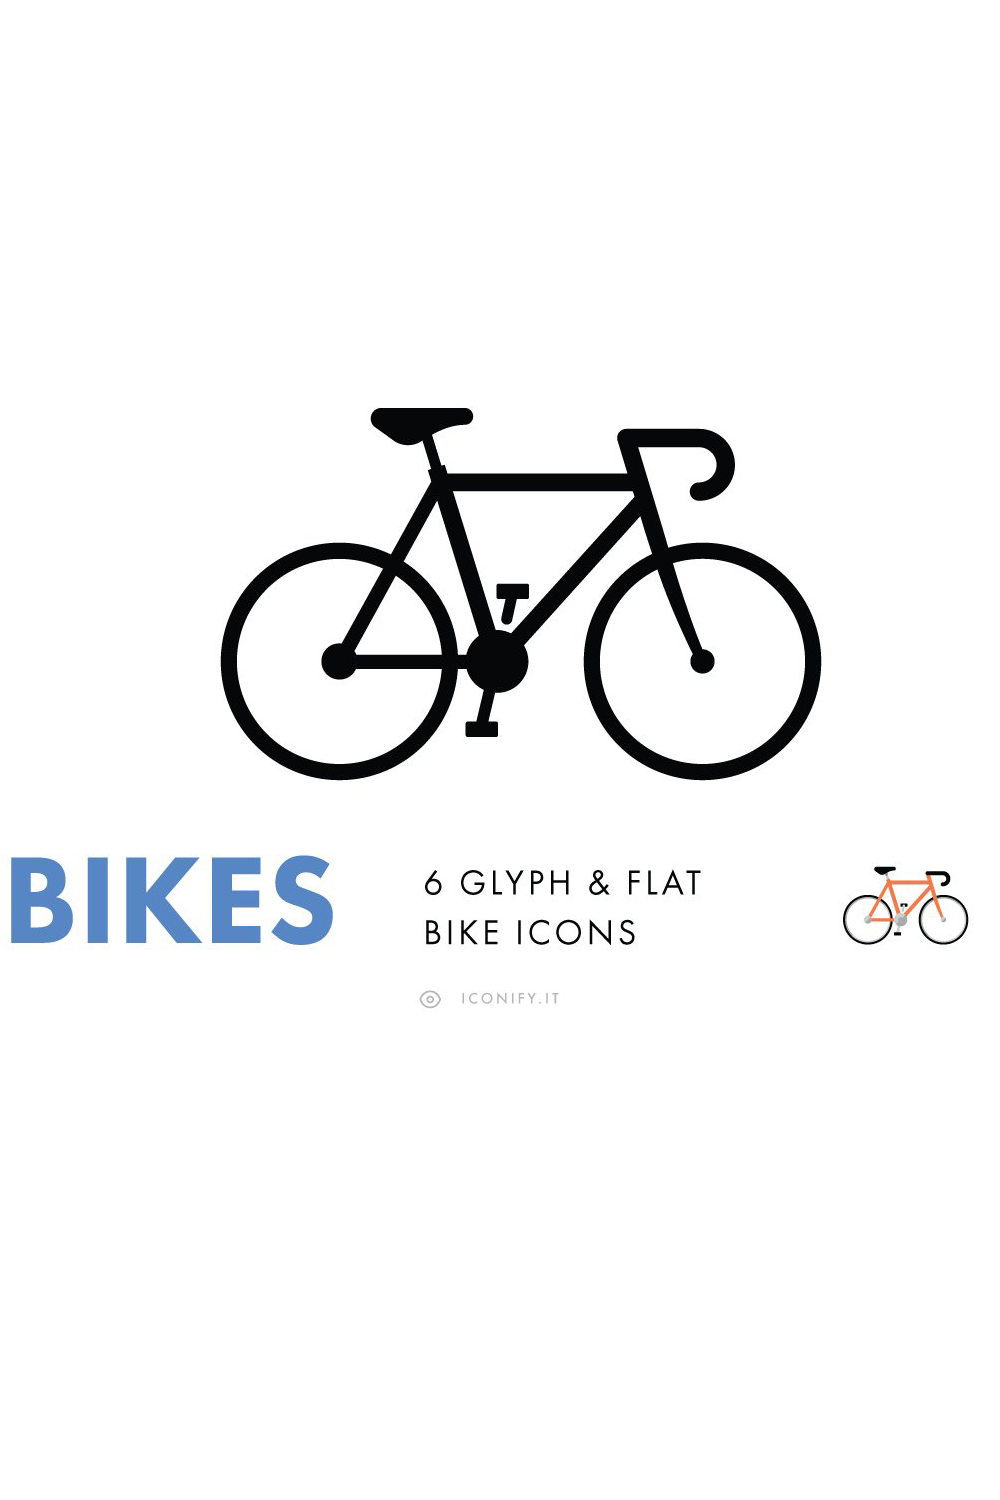 bike icons pinterest 396